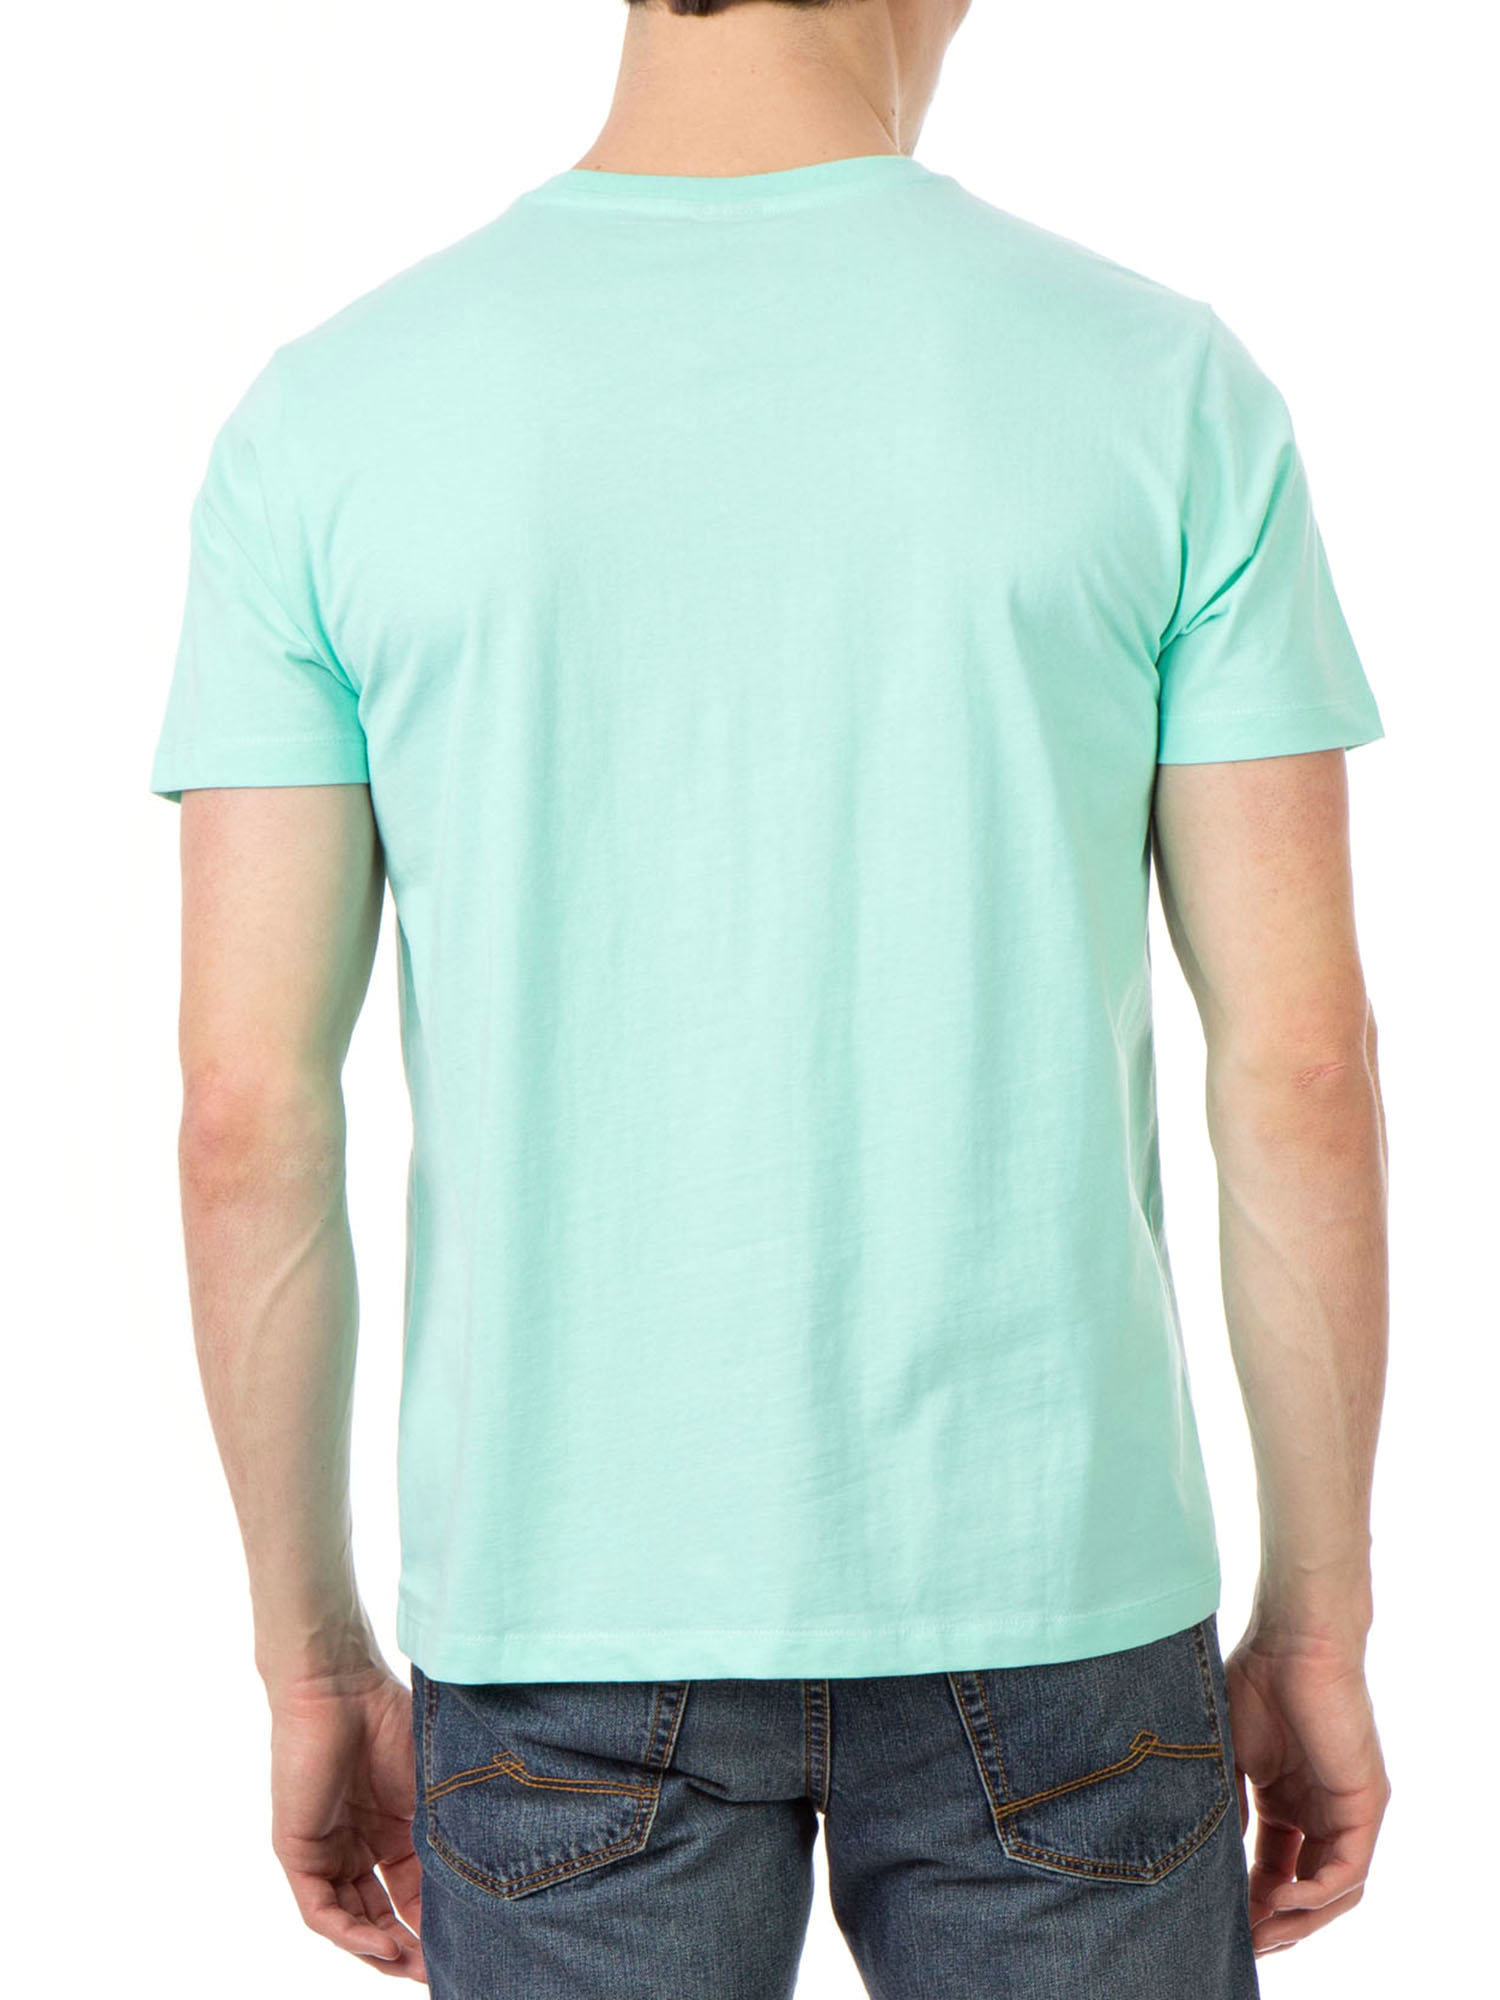 U.S. Polo Assn. Men's Short Sleeve Crew Neck T-Shirt - image 2 of 3